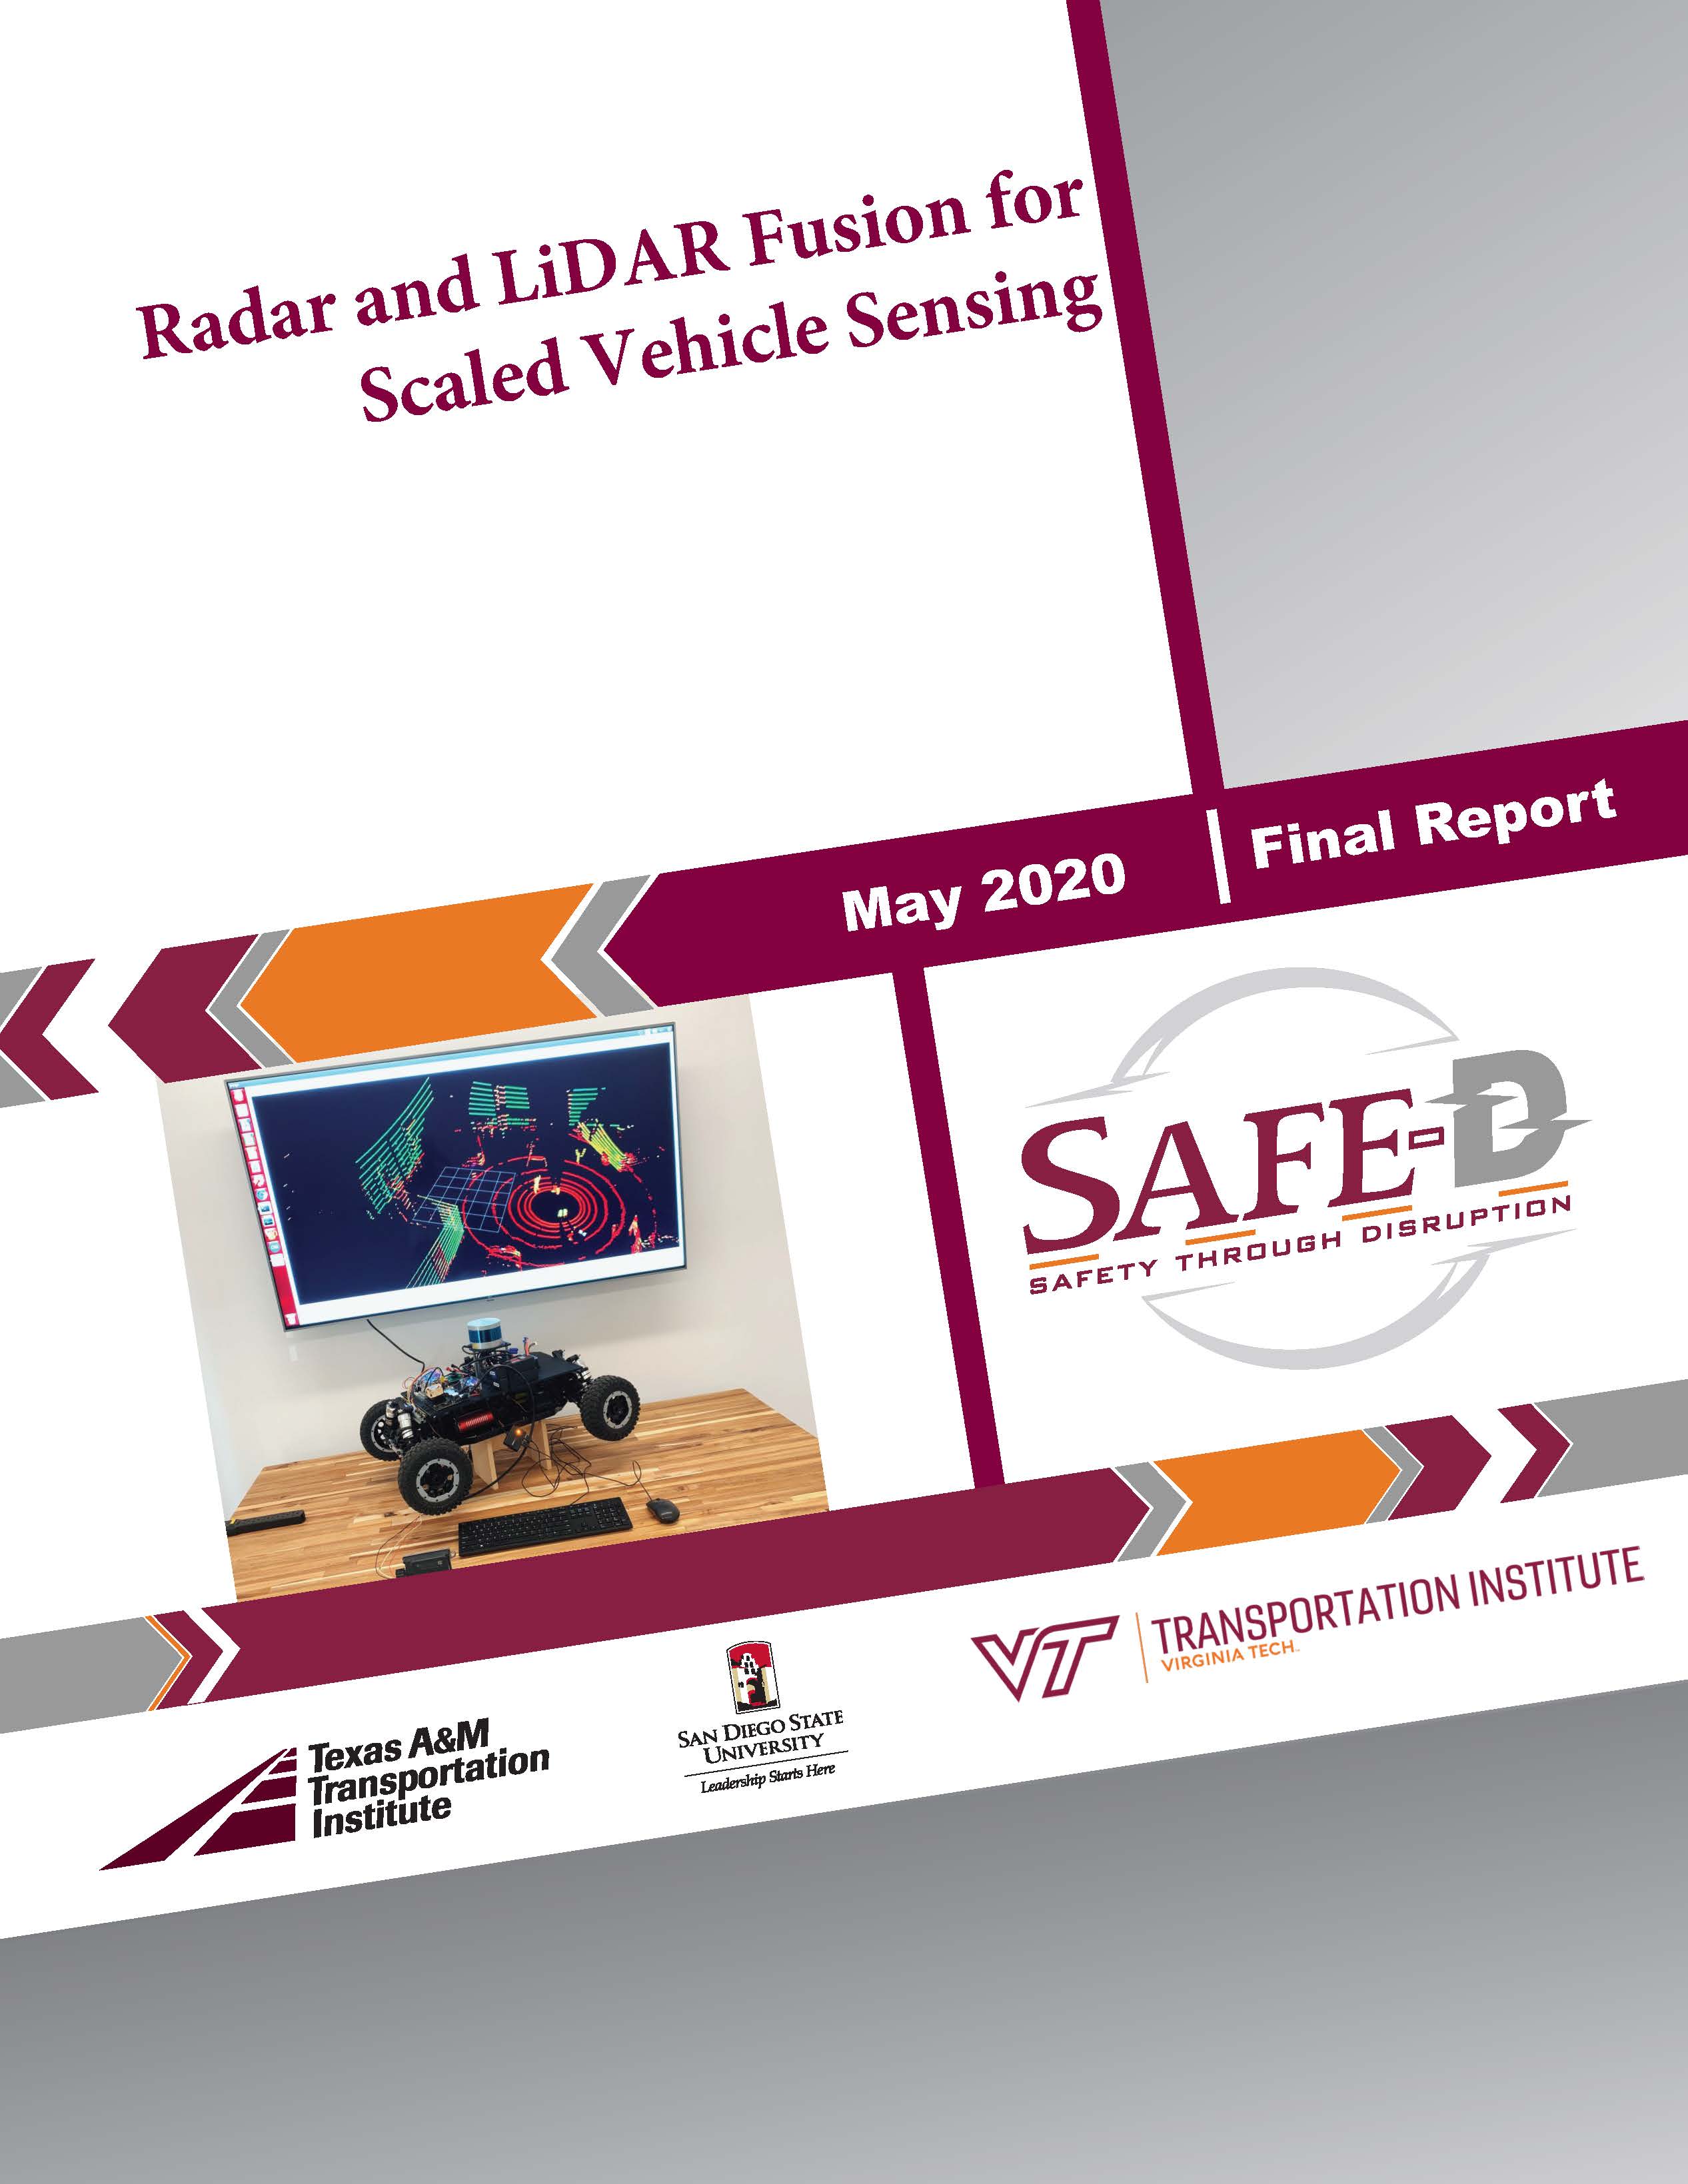 Radar and LiDAR Fusion for Scaled Vehicle Sensing